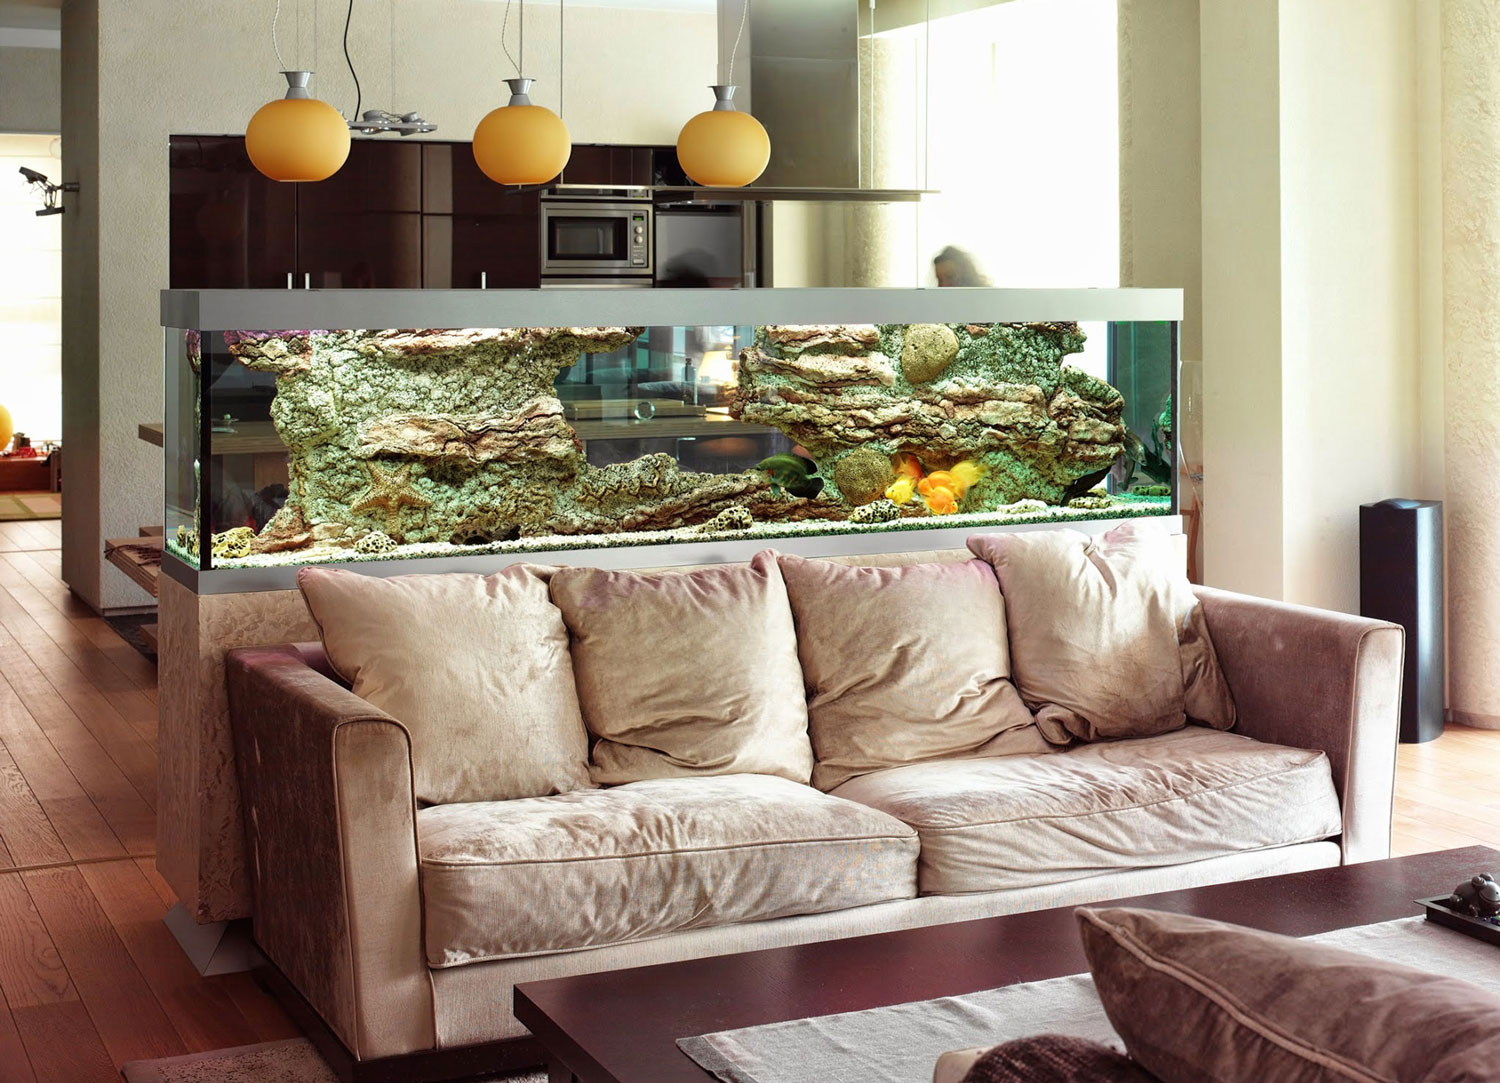 большие аквариумы в интерьере квартиры